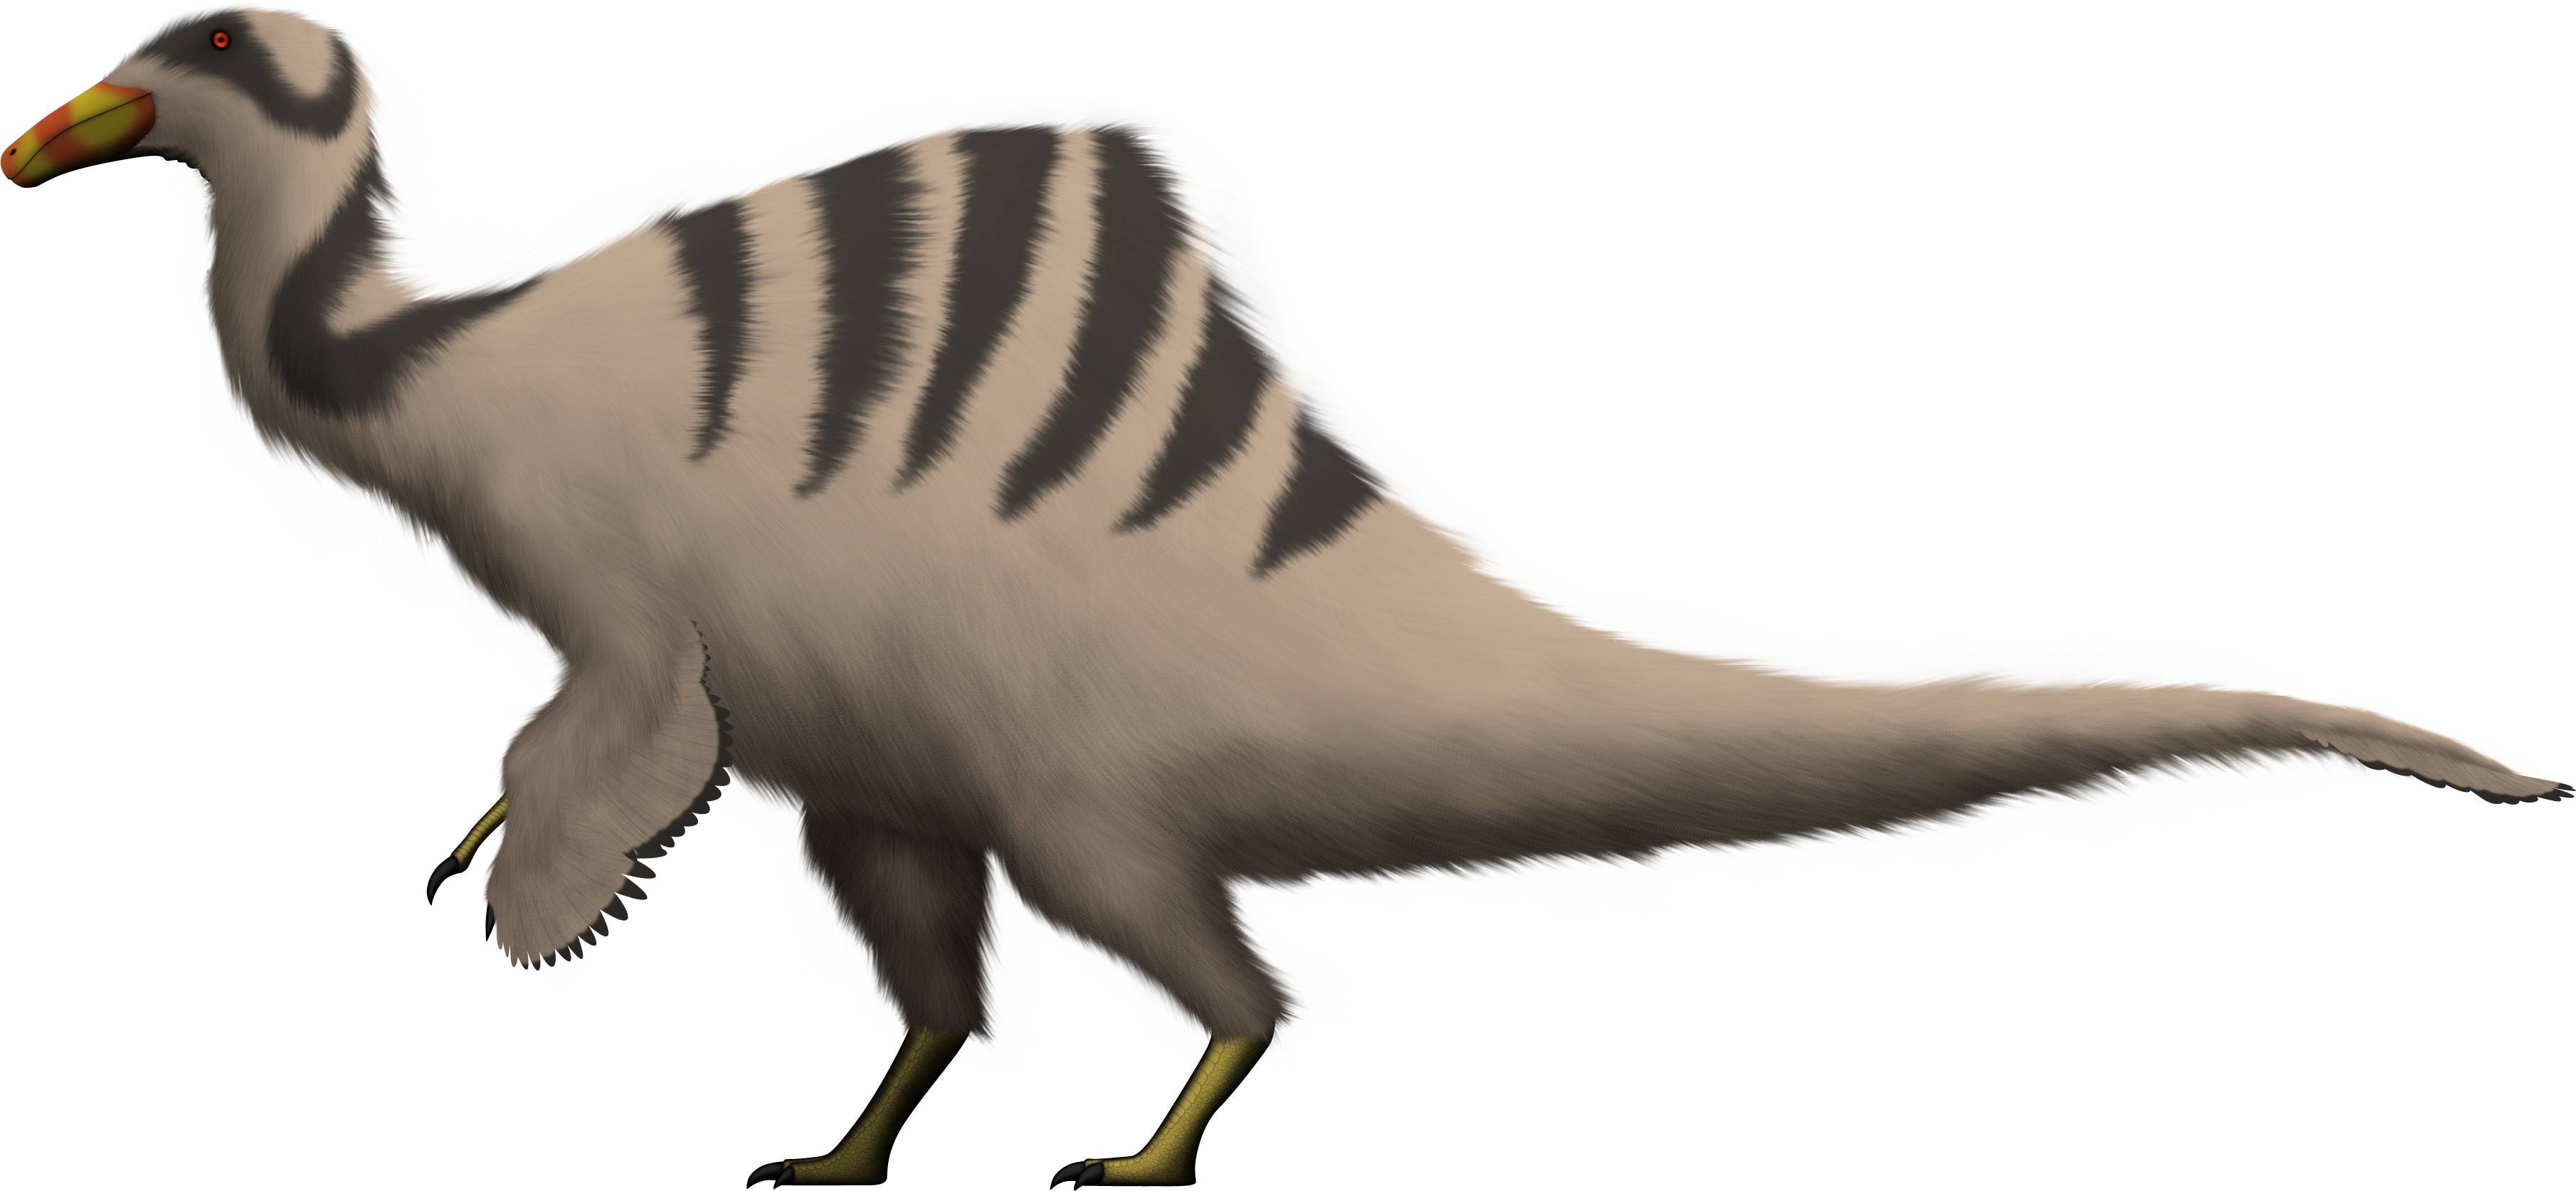 Deinocheirus mirificus, no longer an enigma